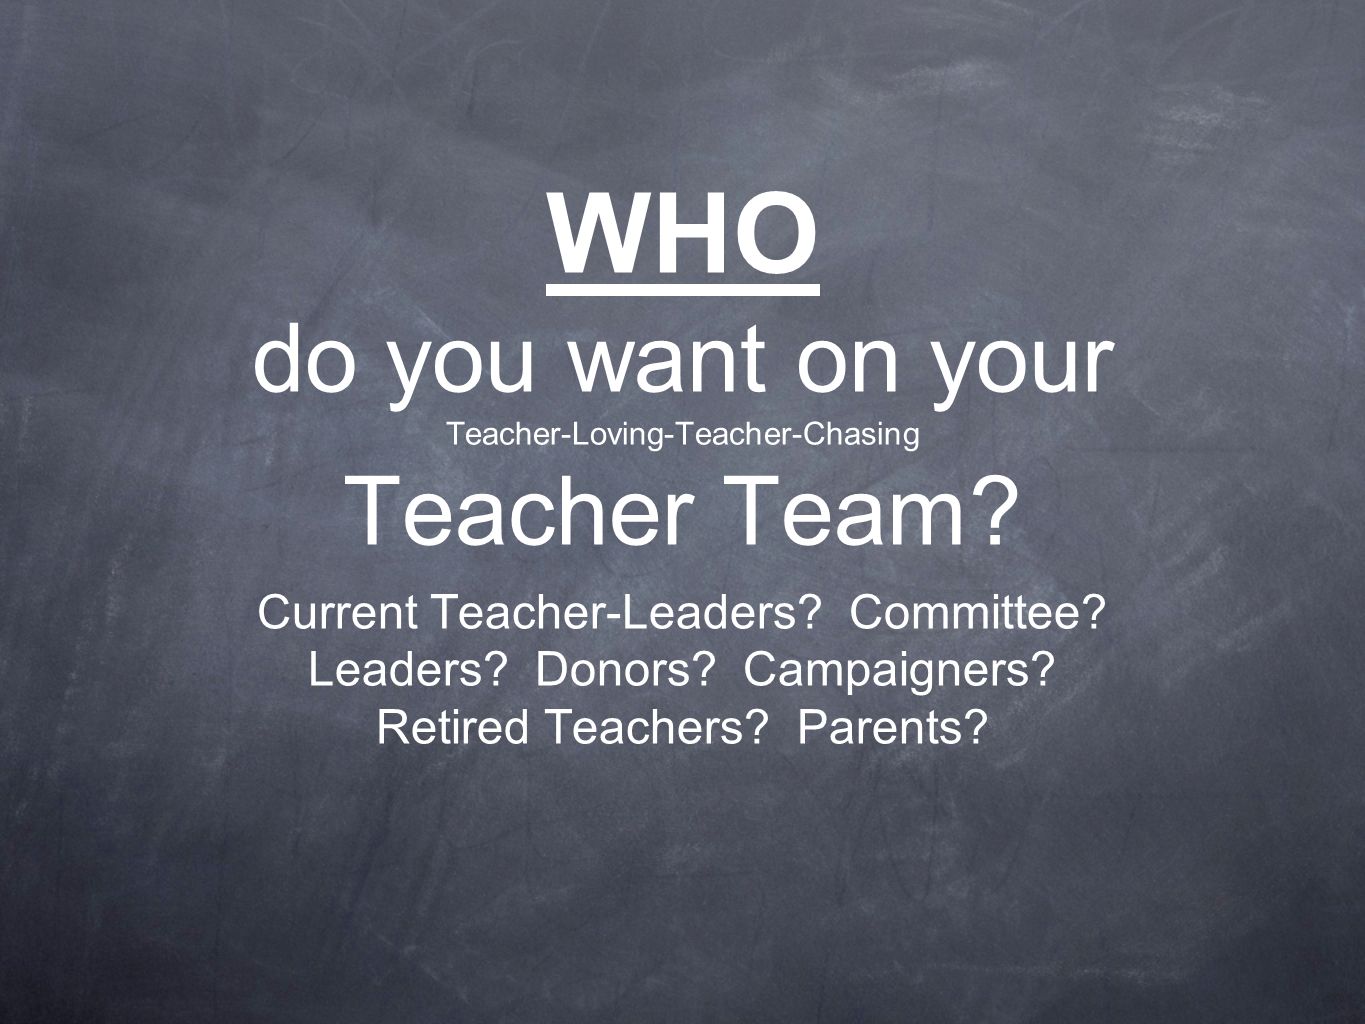 WHO do you want on your Teacher-Loving-Teacher-Chasing Teacher Team.